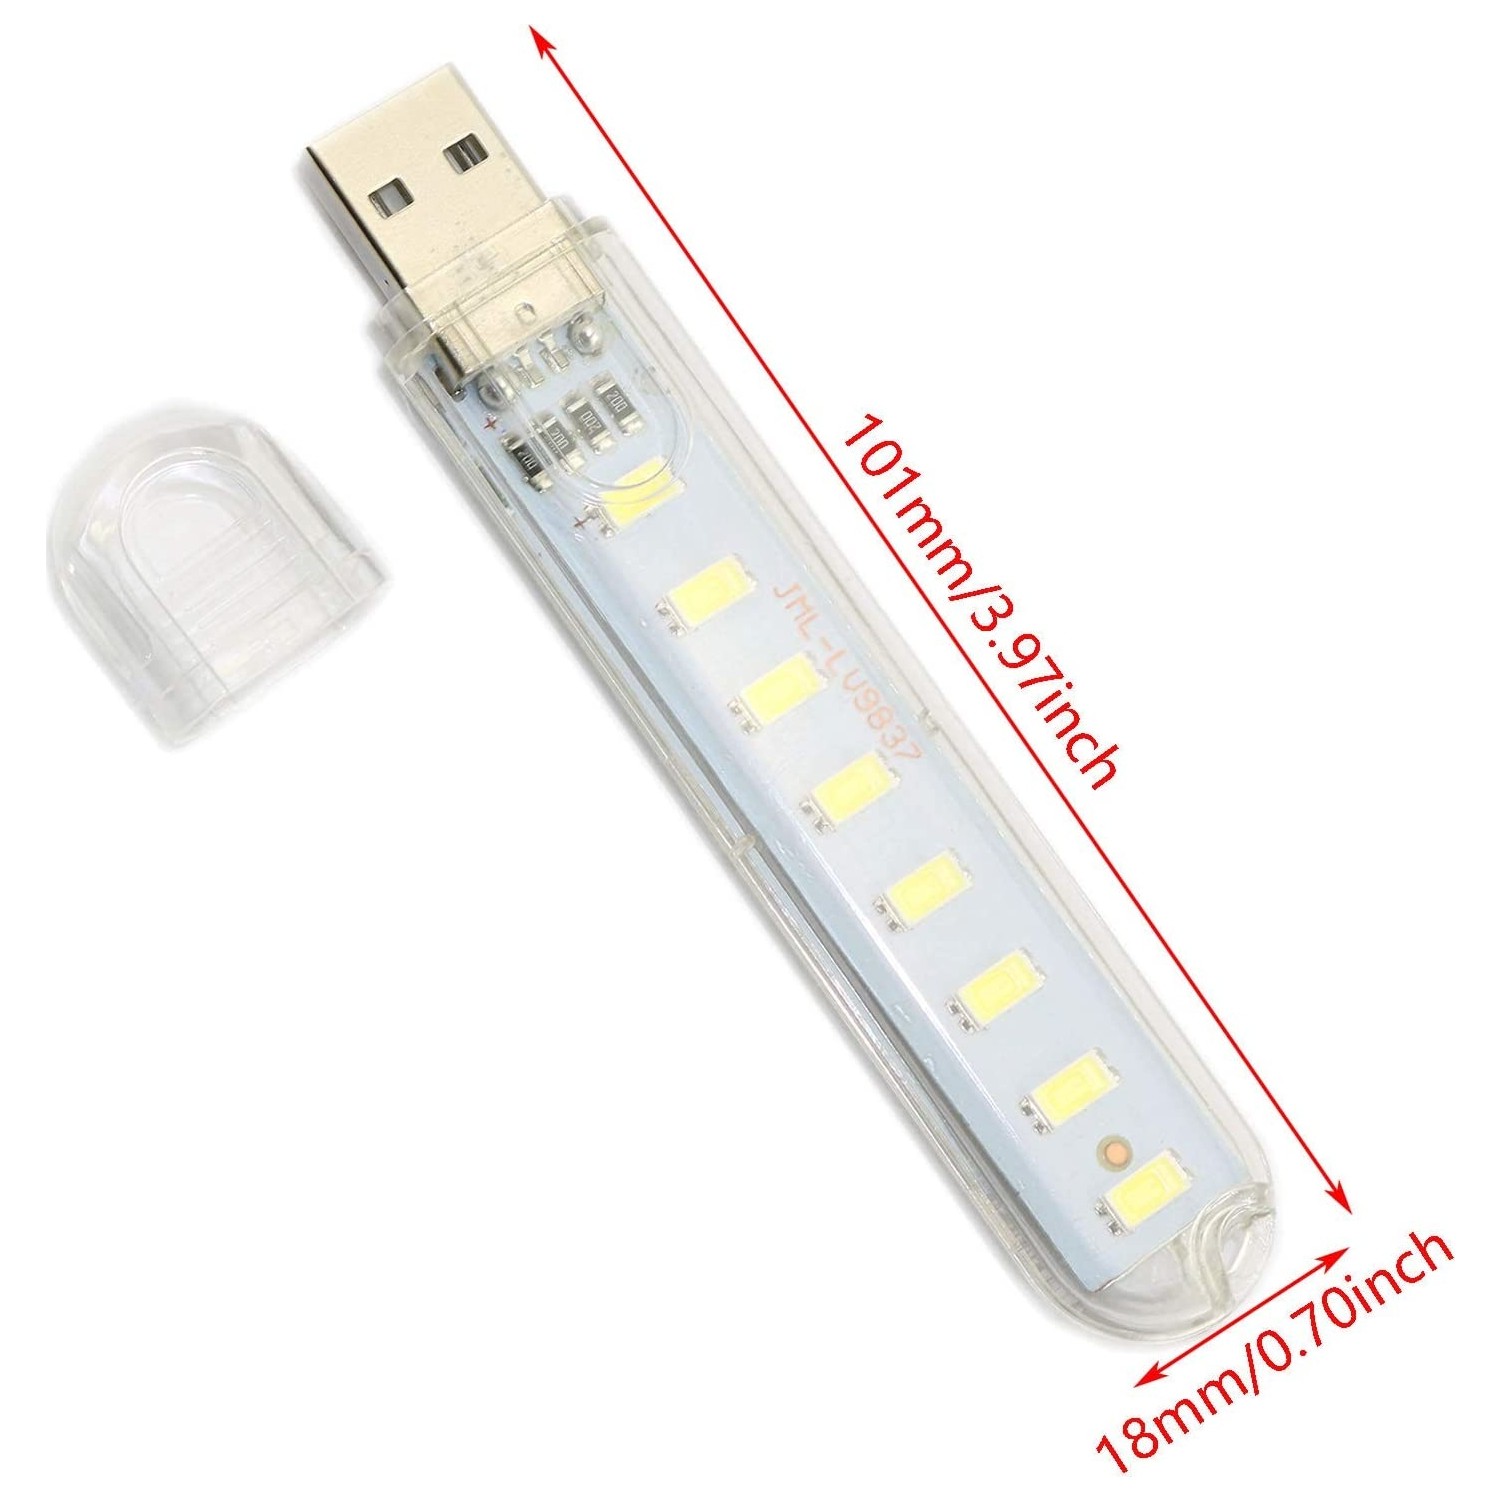 Mini Led Portable 5V 8 LED USB Lighting Computer Mobile Power Lamp